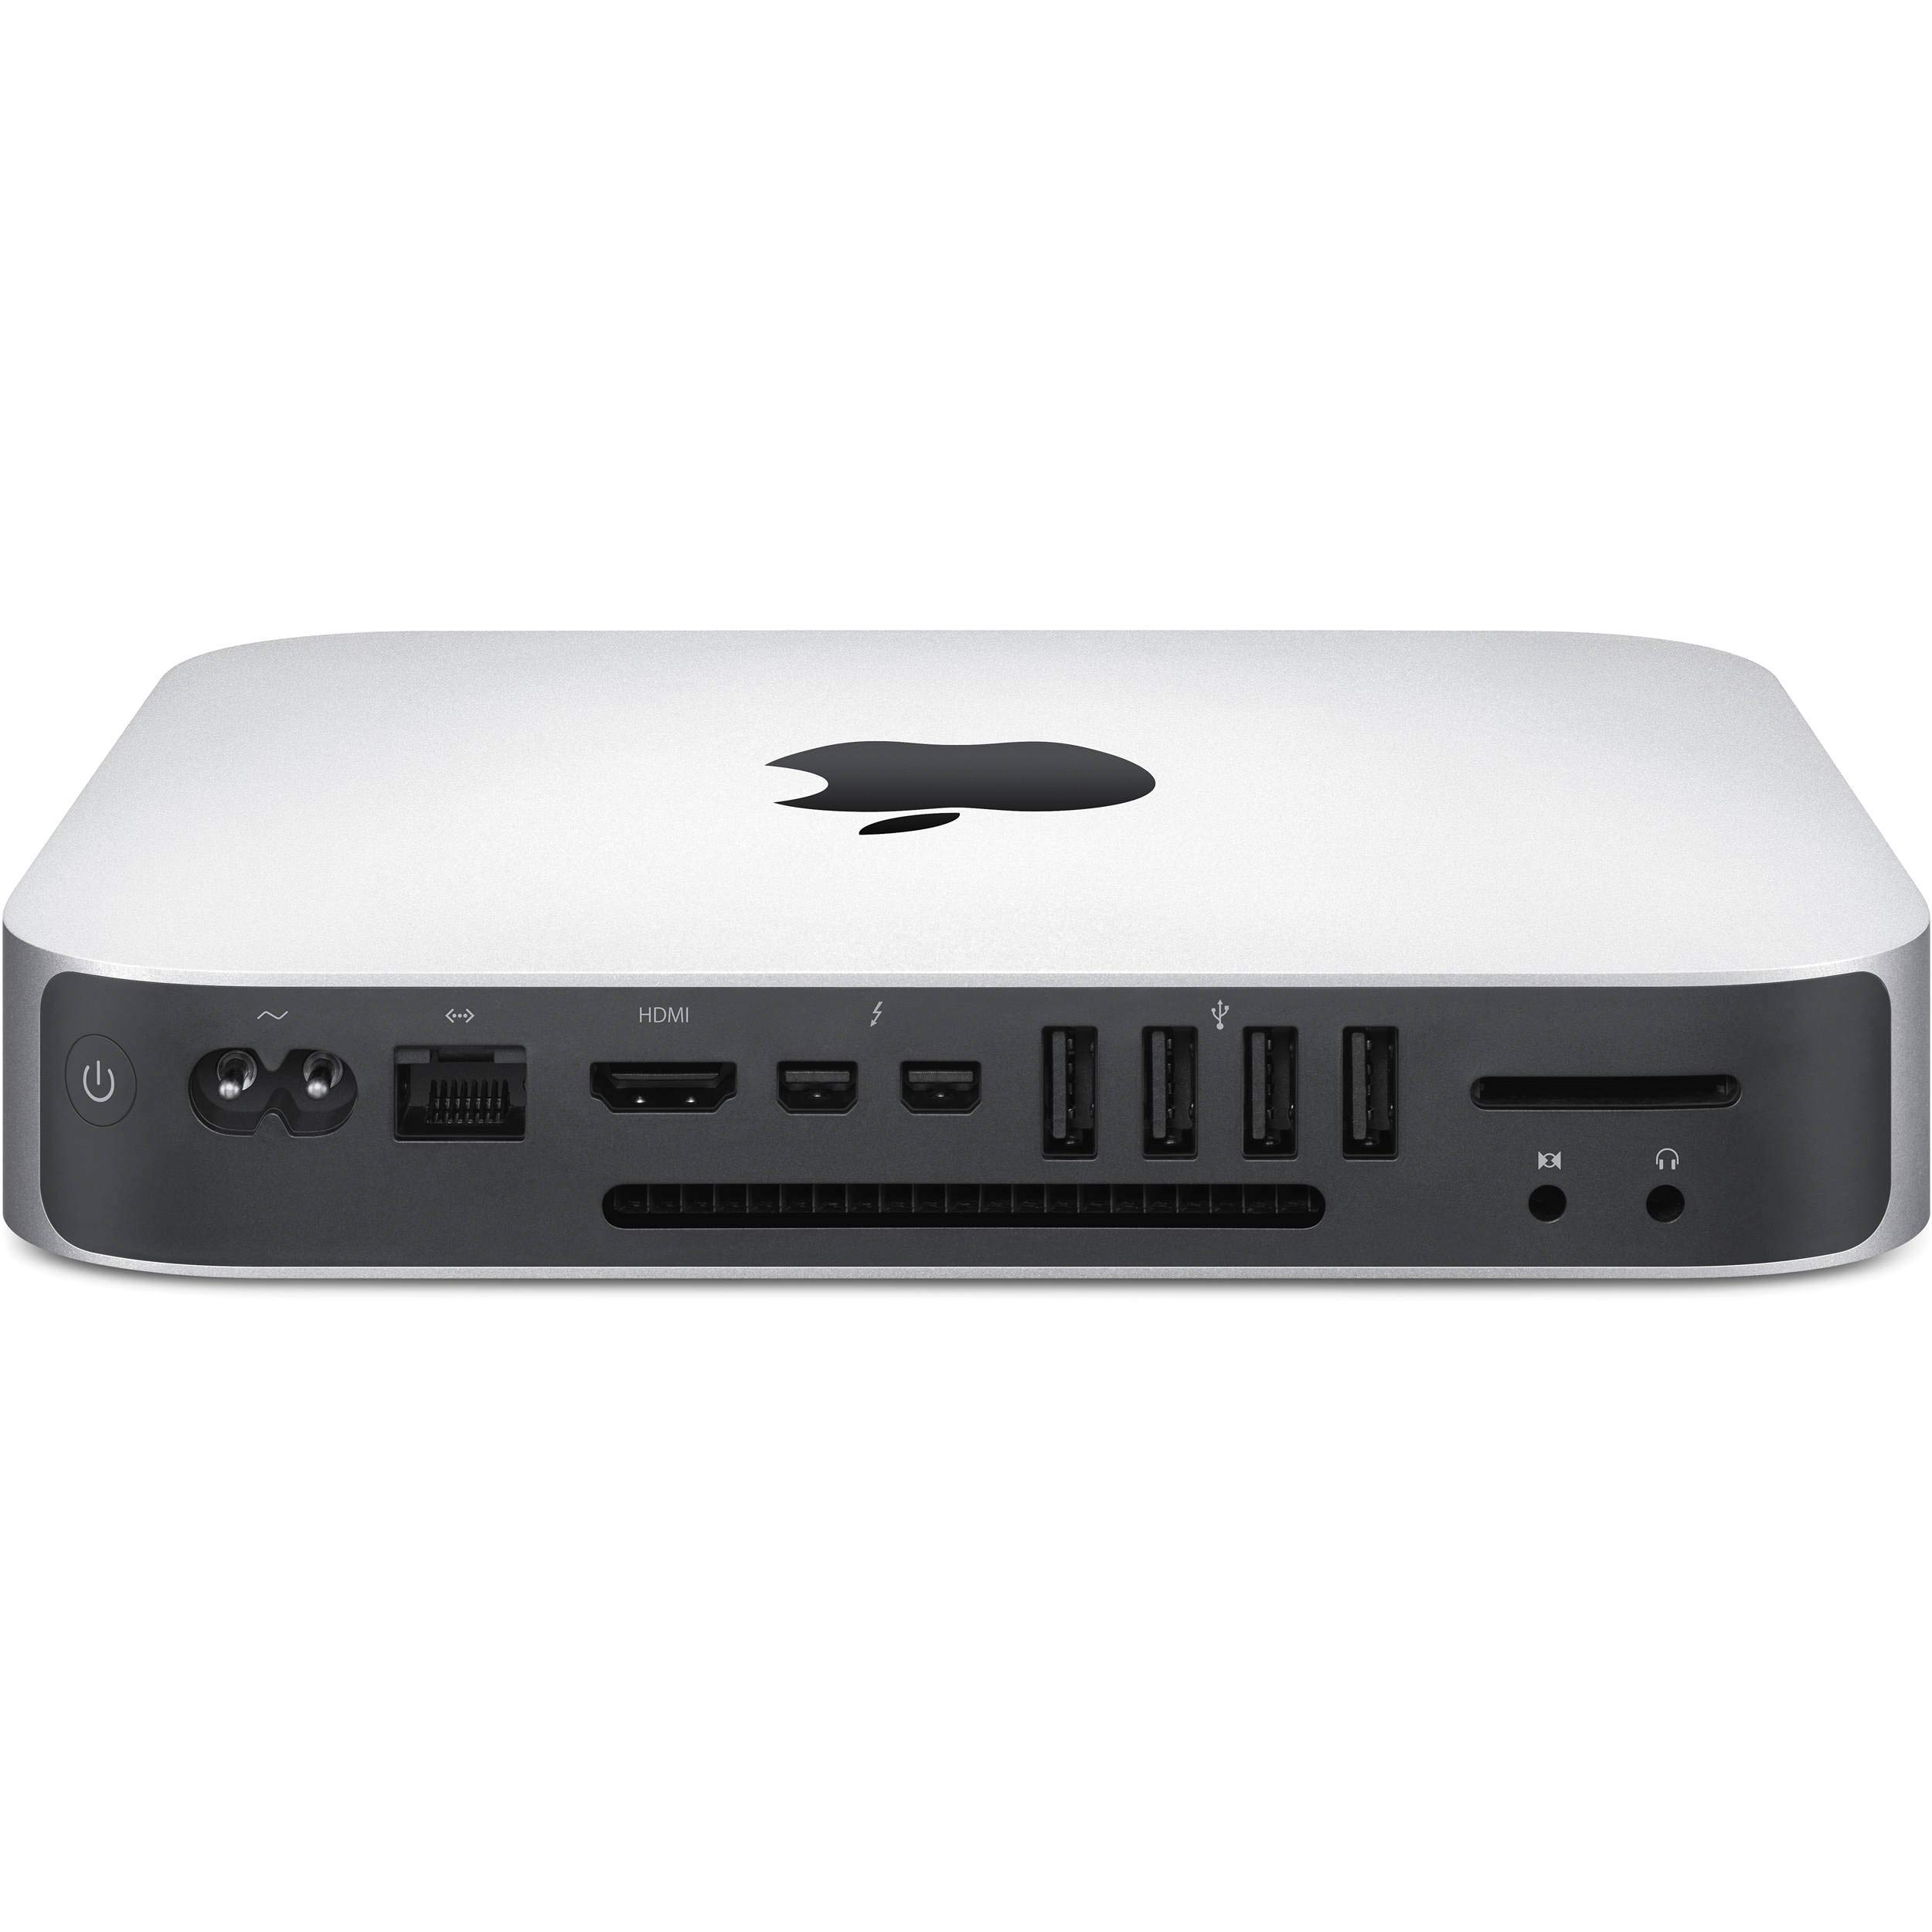 Apple Mac Mini Desktop Intel Core i5 2.6GHz (MGEN2LL/A ) 8GB Memory, 1TB Hard Drive, ThunderBolt (Renewed)